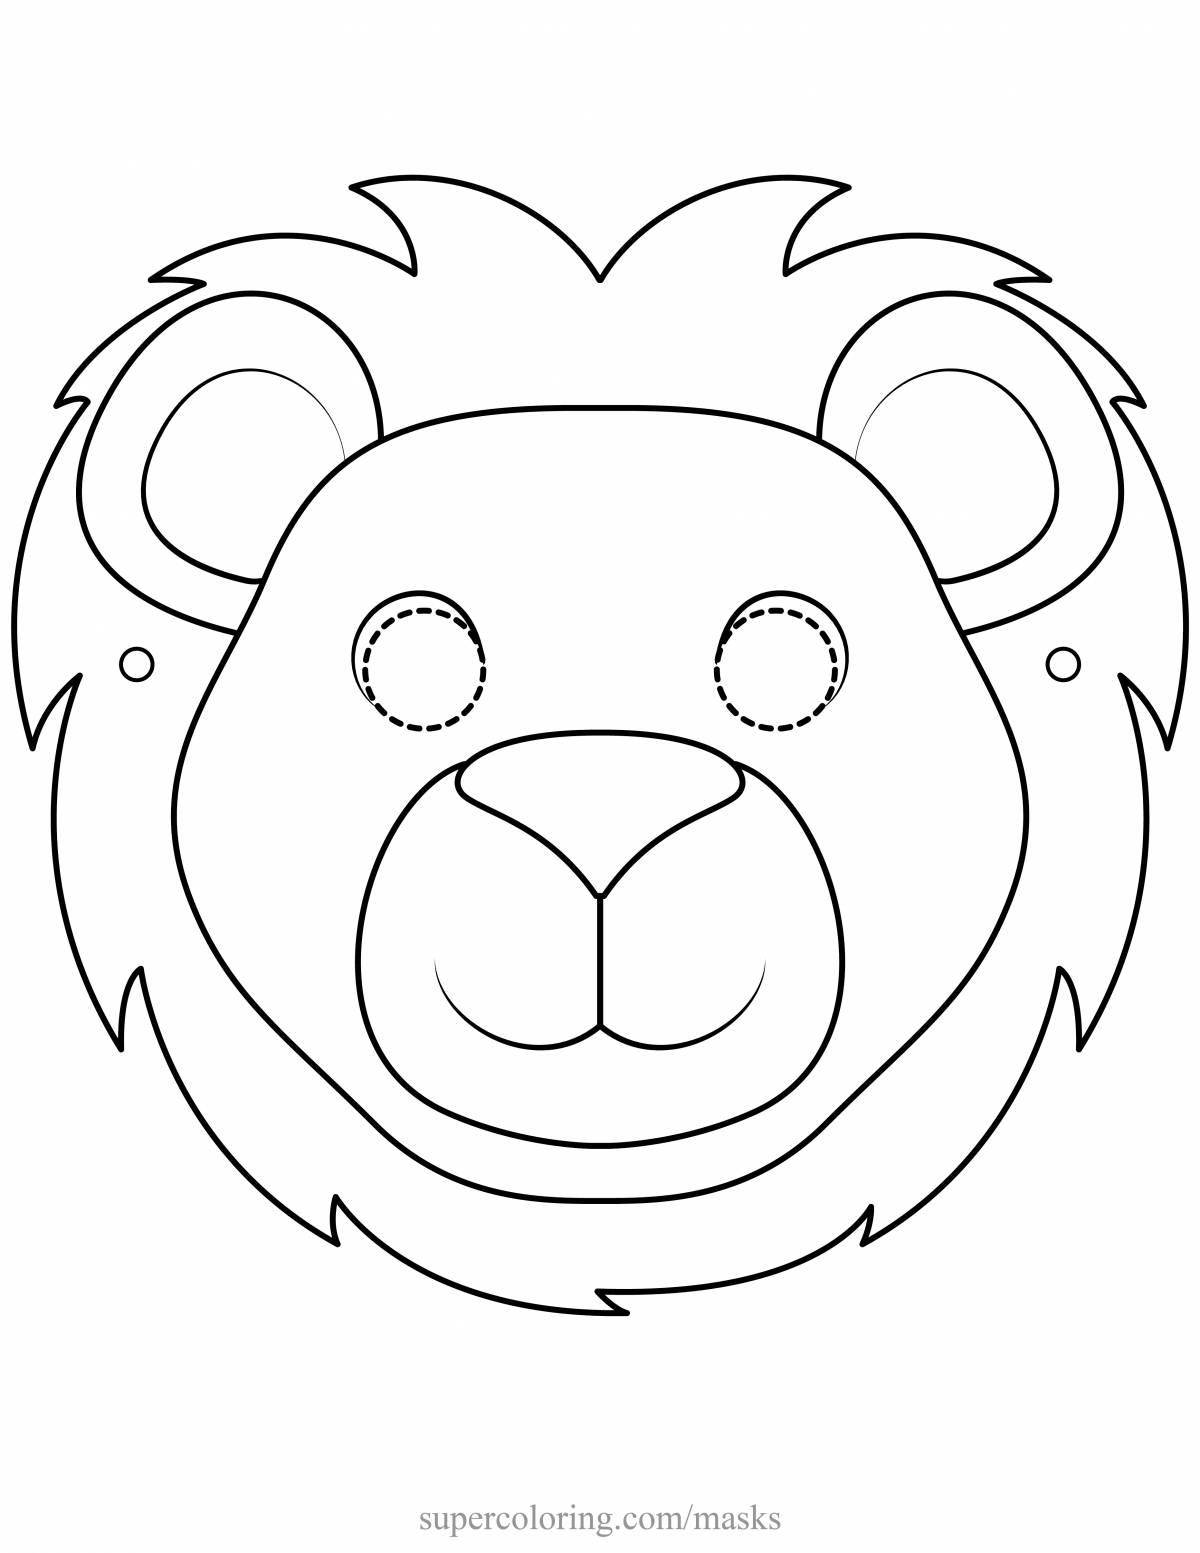 Exquisite lion head coloring page